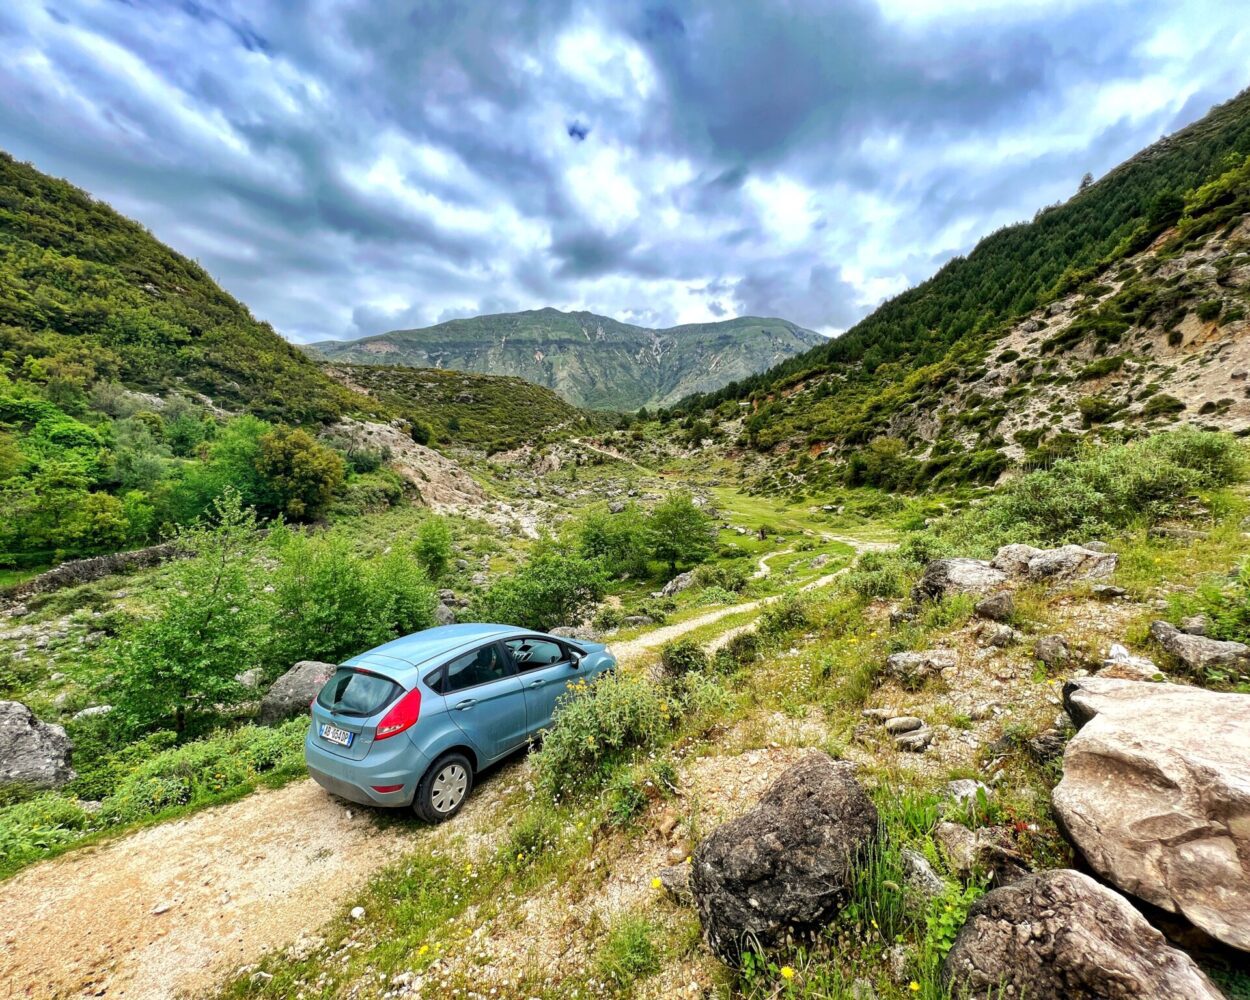 Půjčovna aut Albánie hory vyhlídkové levný pronájem